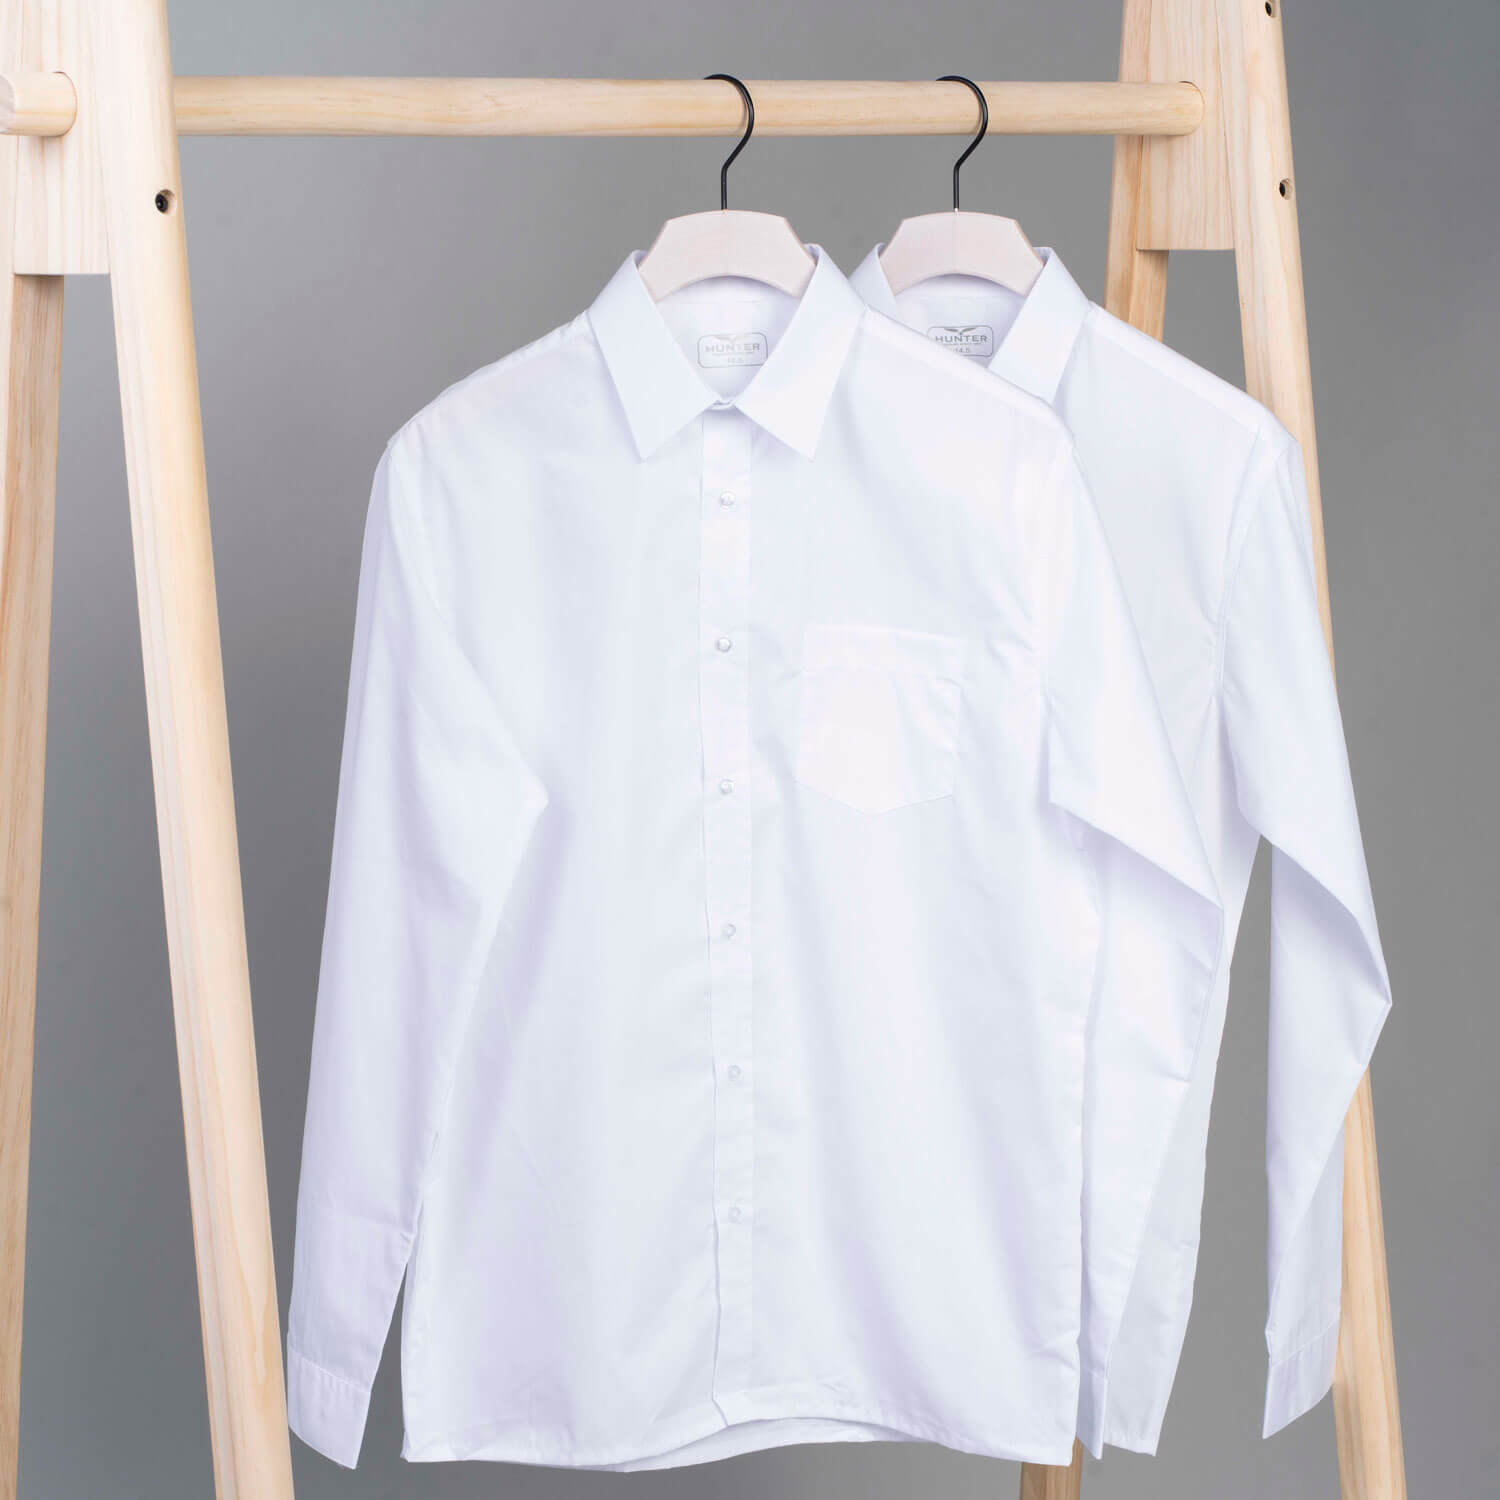 Hunter Long-Sleeve Regular Fit 2 Pack Shirts - White 1 Shaws Department Stores